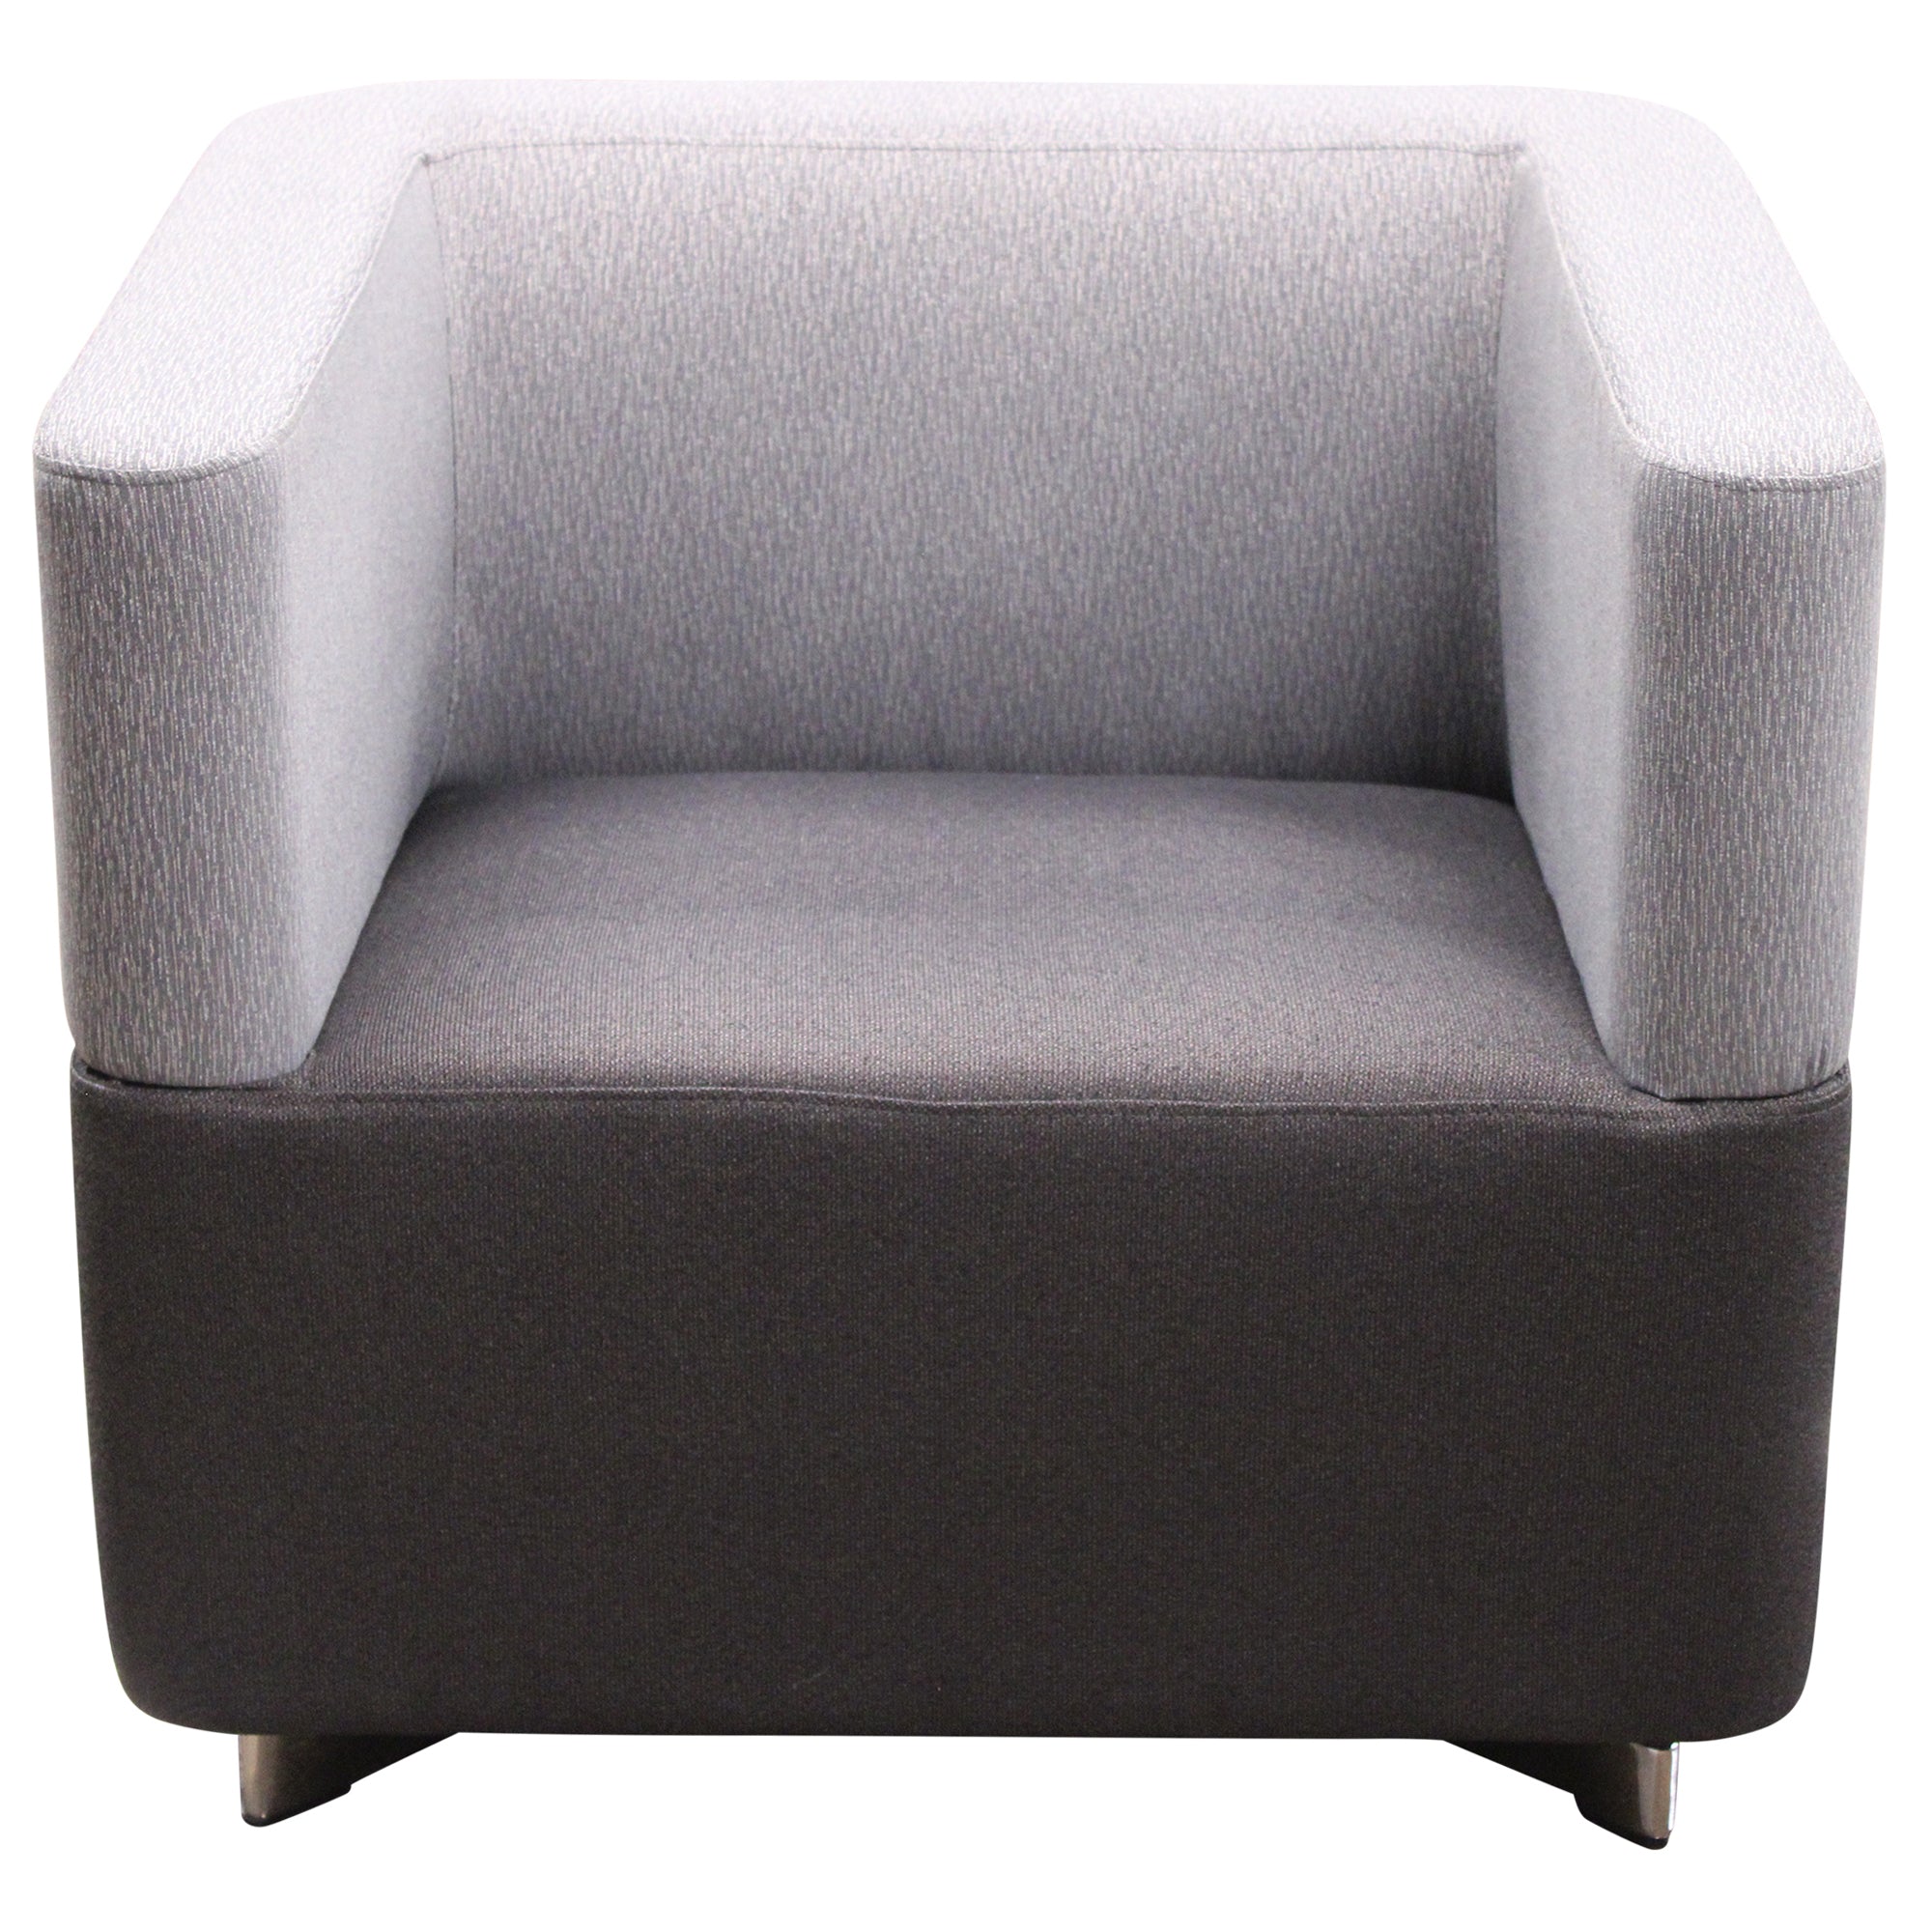 Davis Furniture Meo Lounge Chair, Dark Grey - Preowned